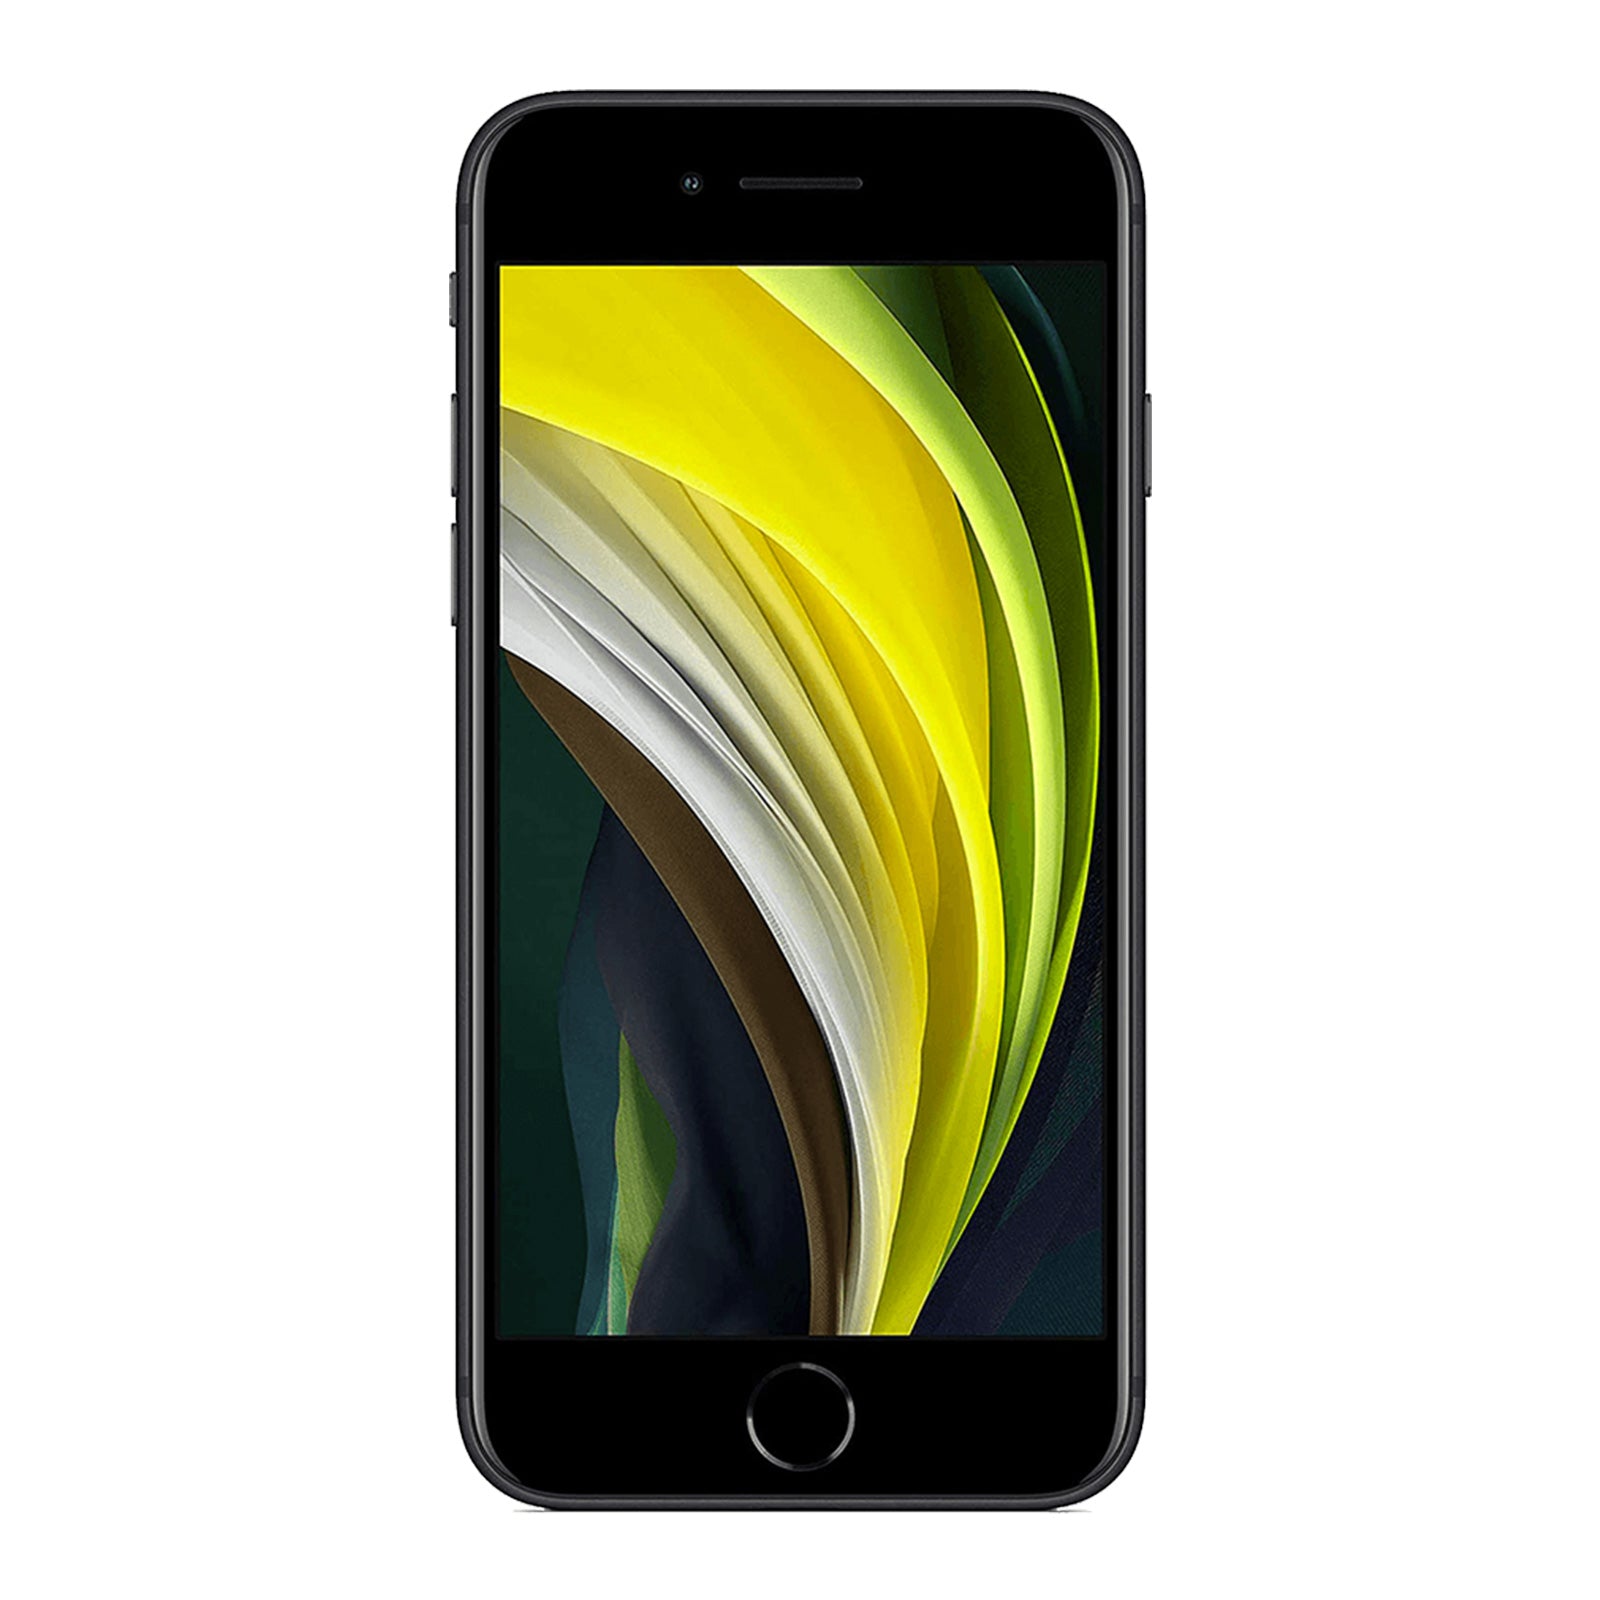 Apple iPhone SE 2nd Gen 64GB Black Good AT&T